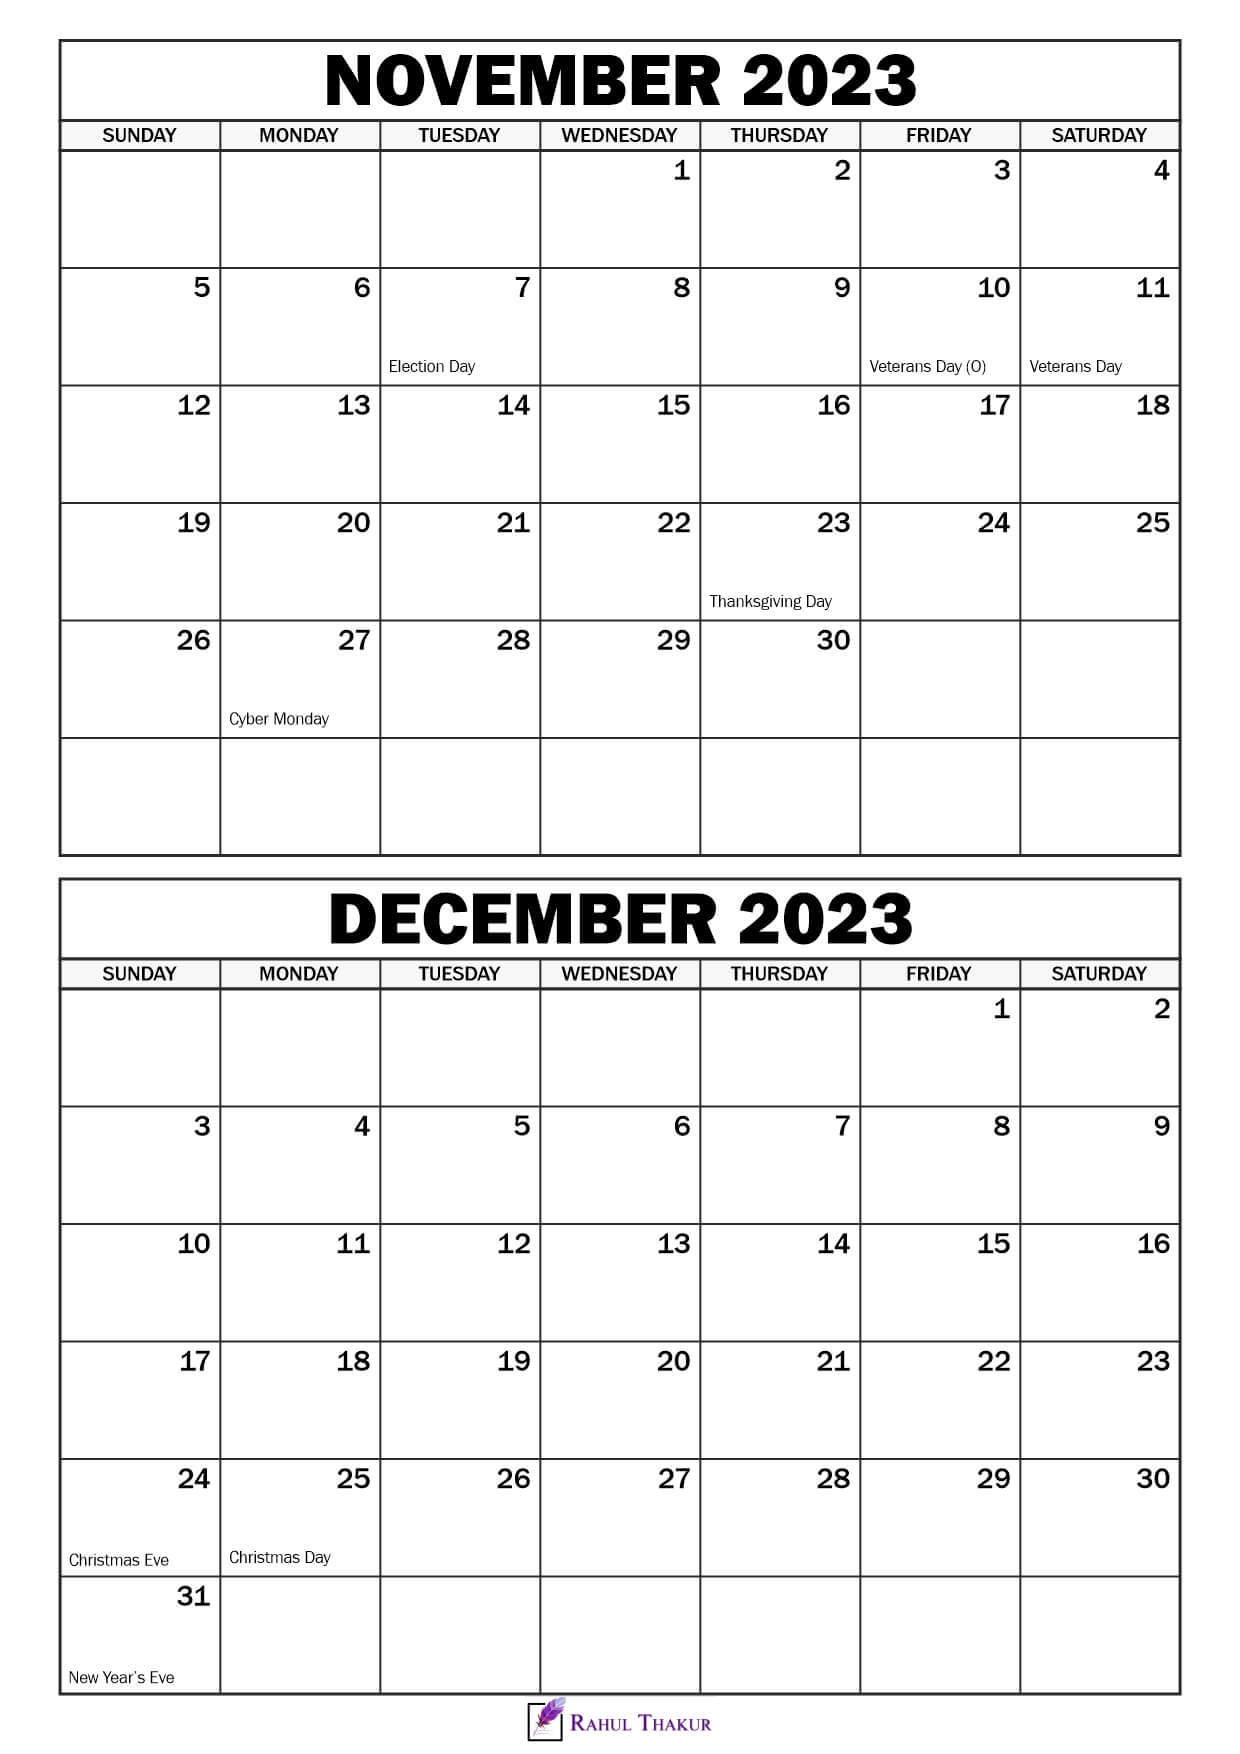 November December 2023 Calendar with Holidays